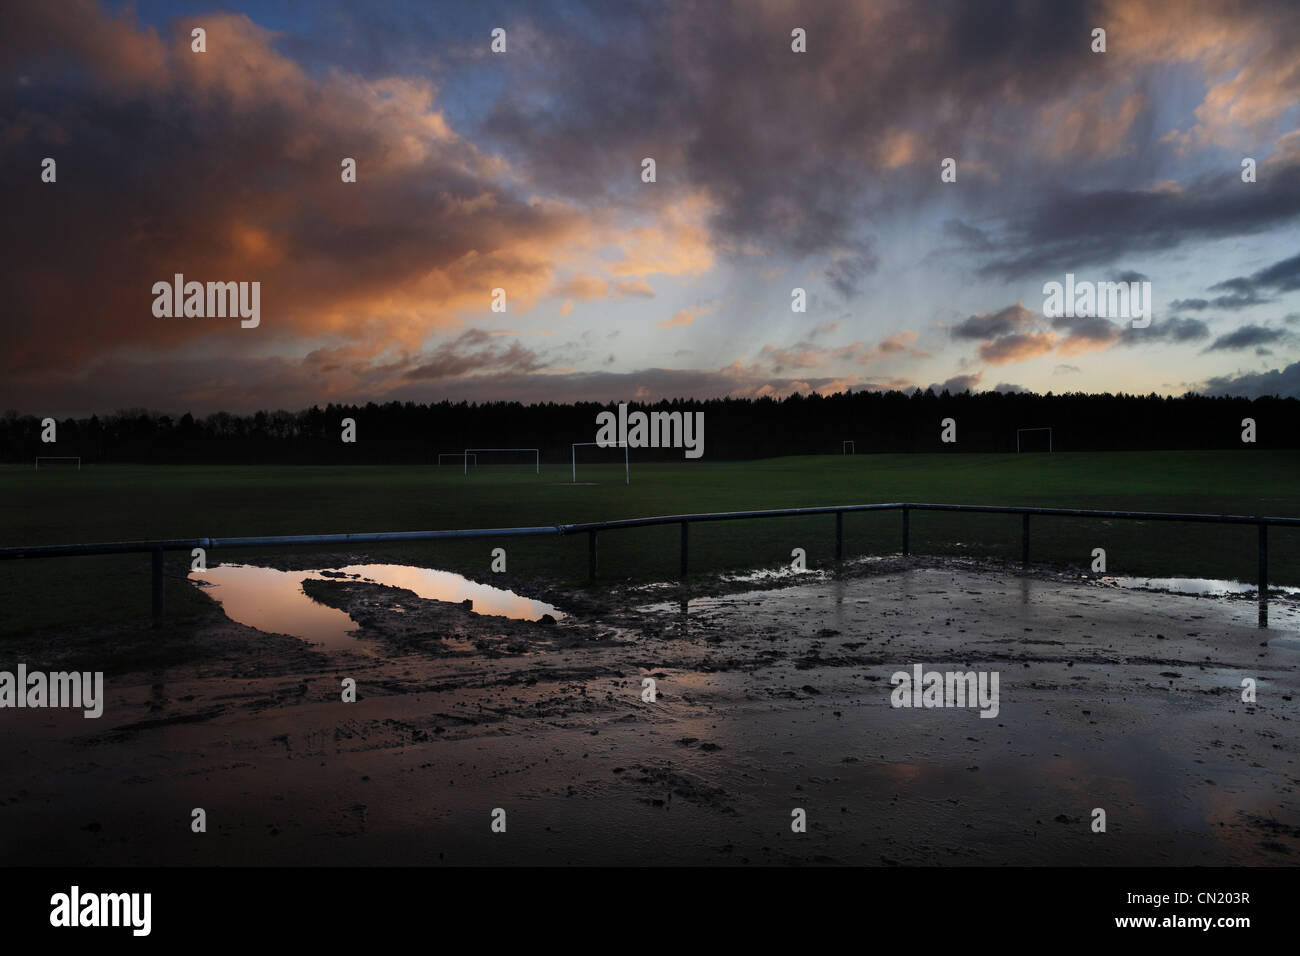 Football pitch at dusk Stock Photo